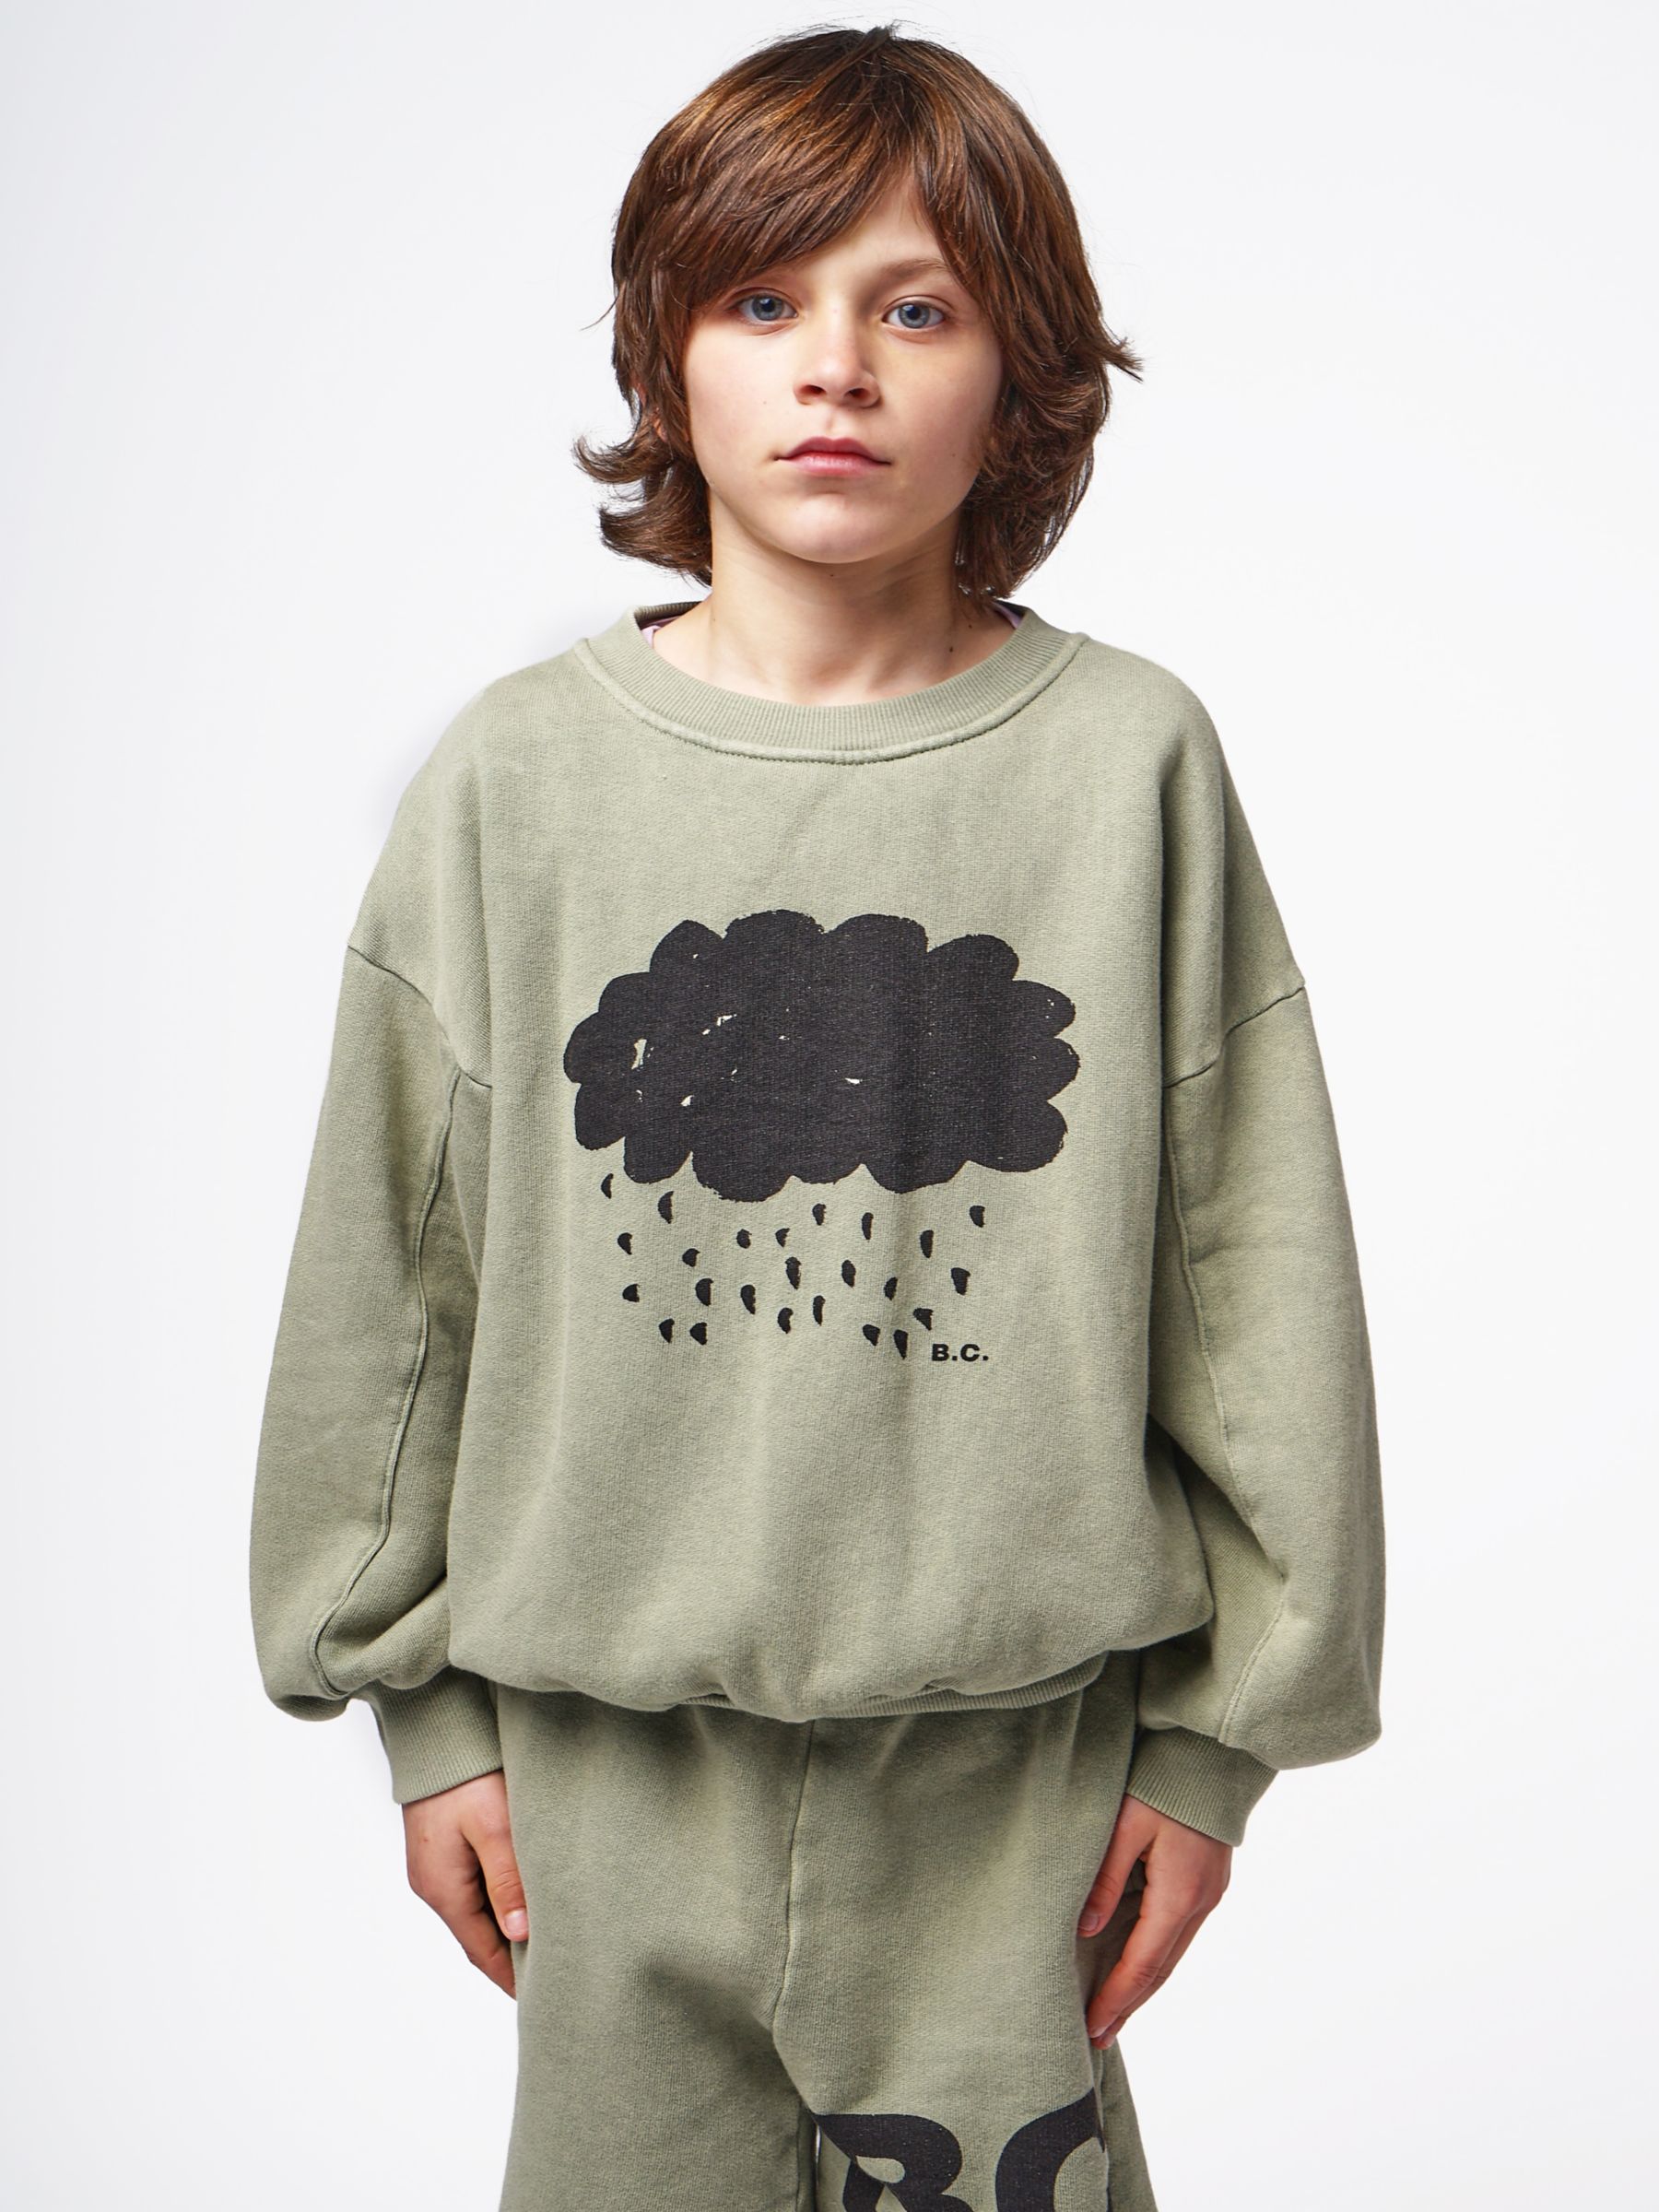 Bobo Choses Kids' Organic Cotton Blend Cloud Sweatshirt, Khaki, 2-3 years